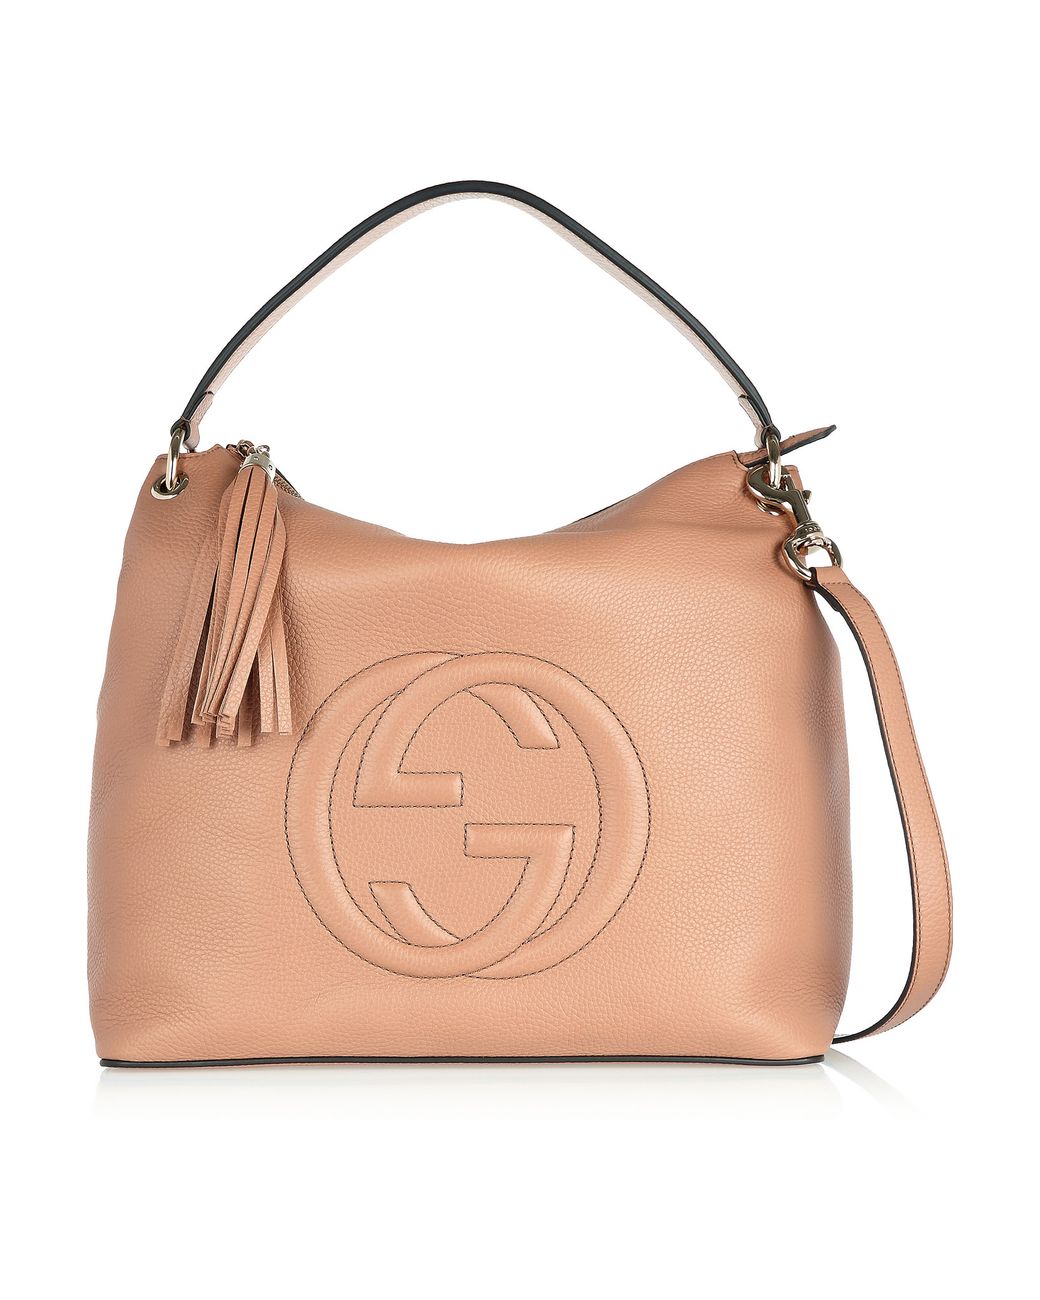 Gucci Soho Hobo Large Textured-leather Shoulder Bag | Lyst